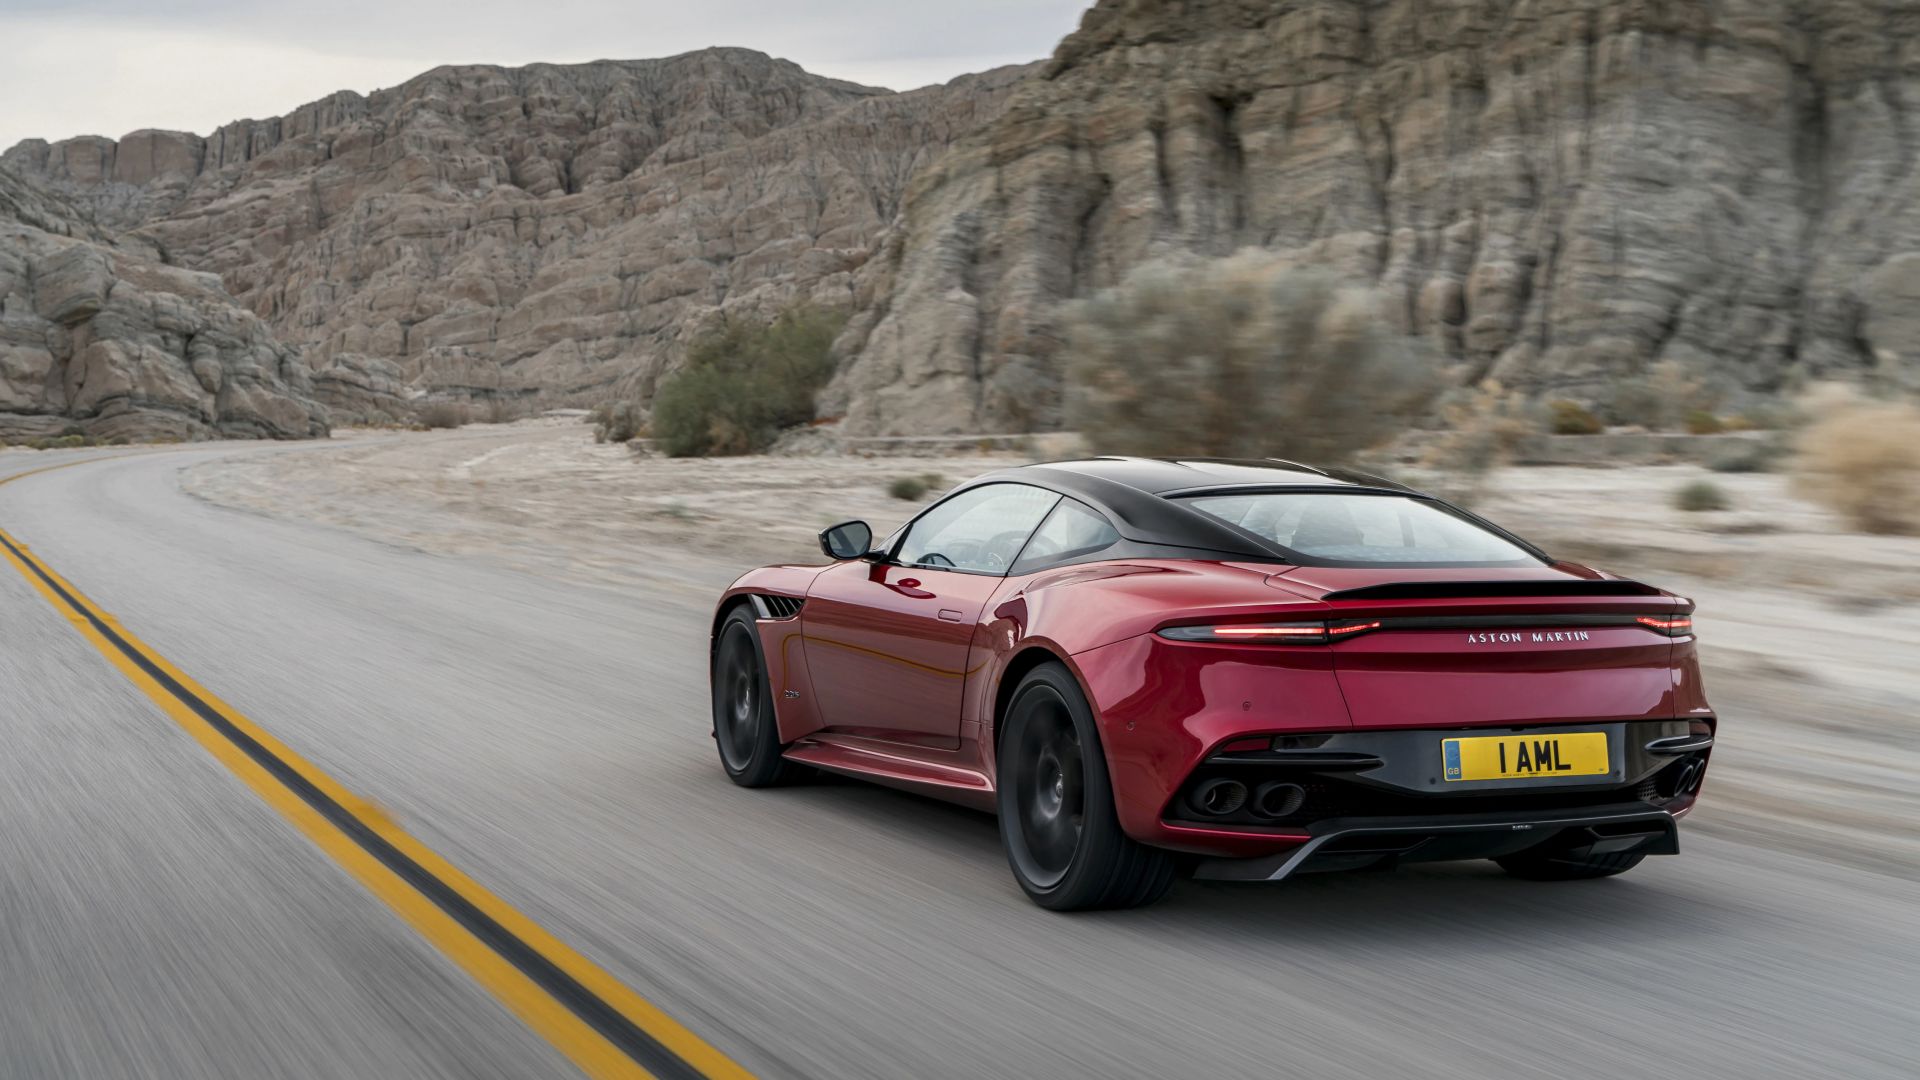 Aston Martin DBS Superleggera, 2019 Cars, 5K (horizontal)